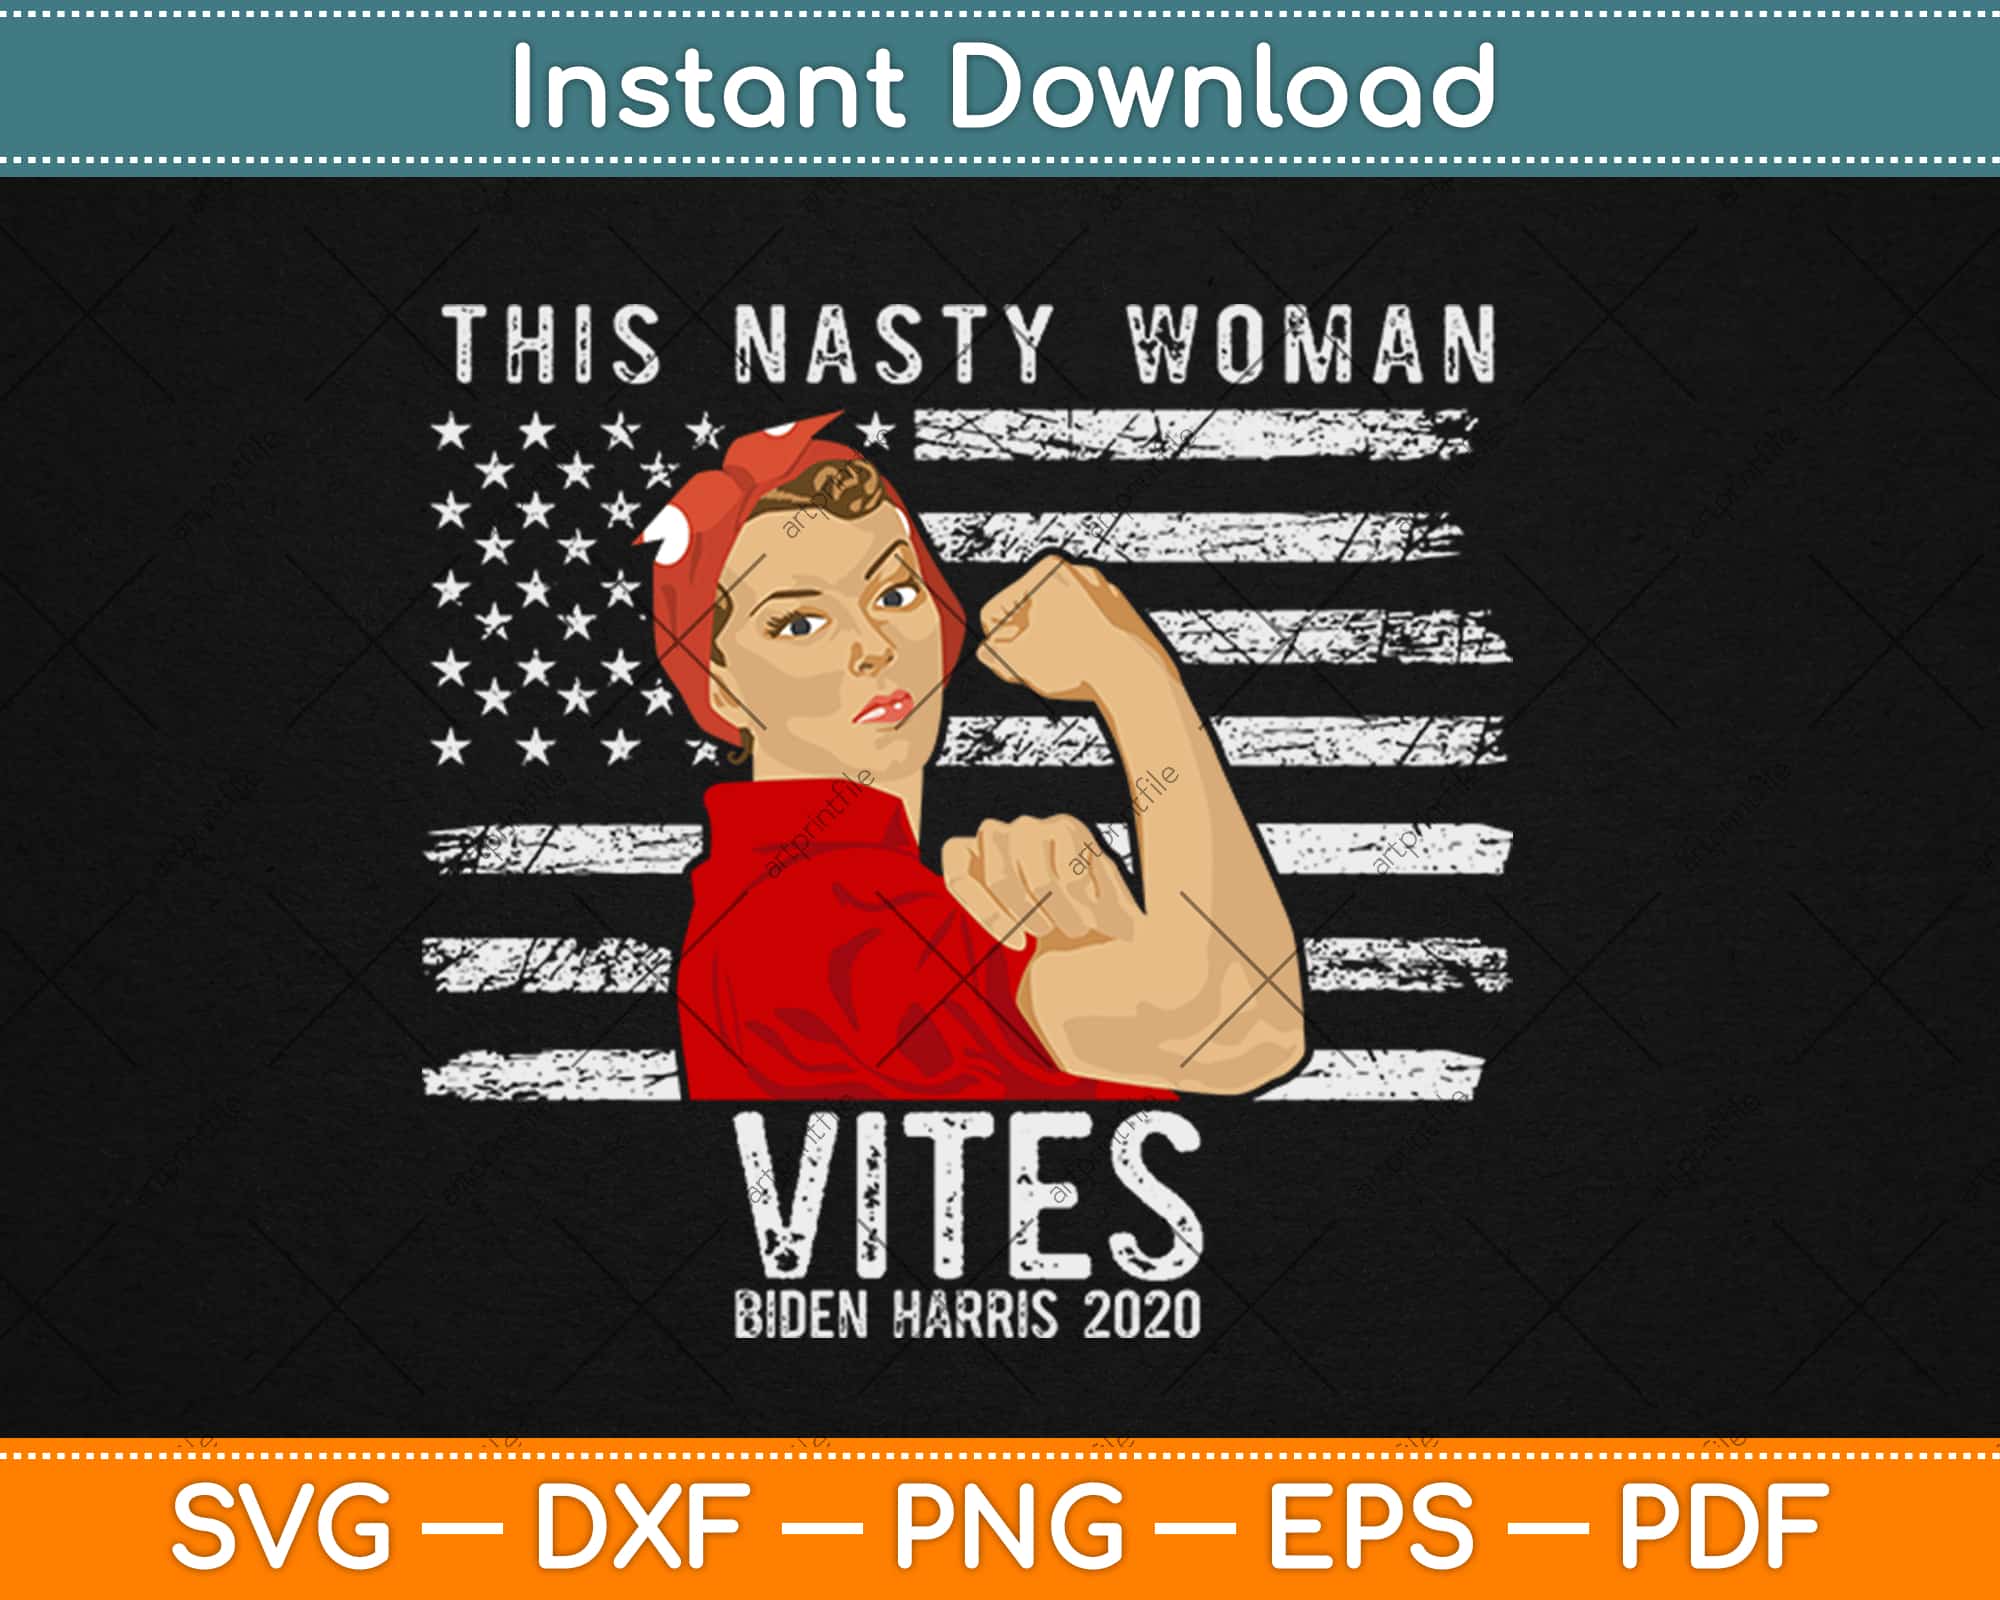 Biden Harris 2020 This Nasty Woman Votes Svg Design Craft Cut File Instant Download Artprintfile